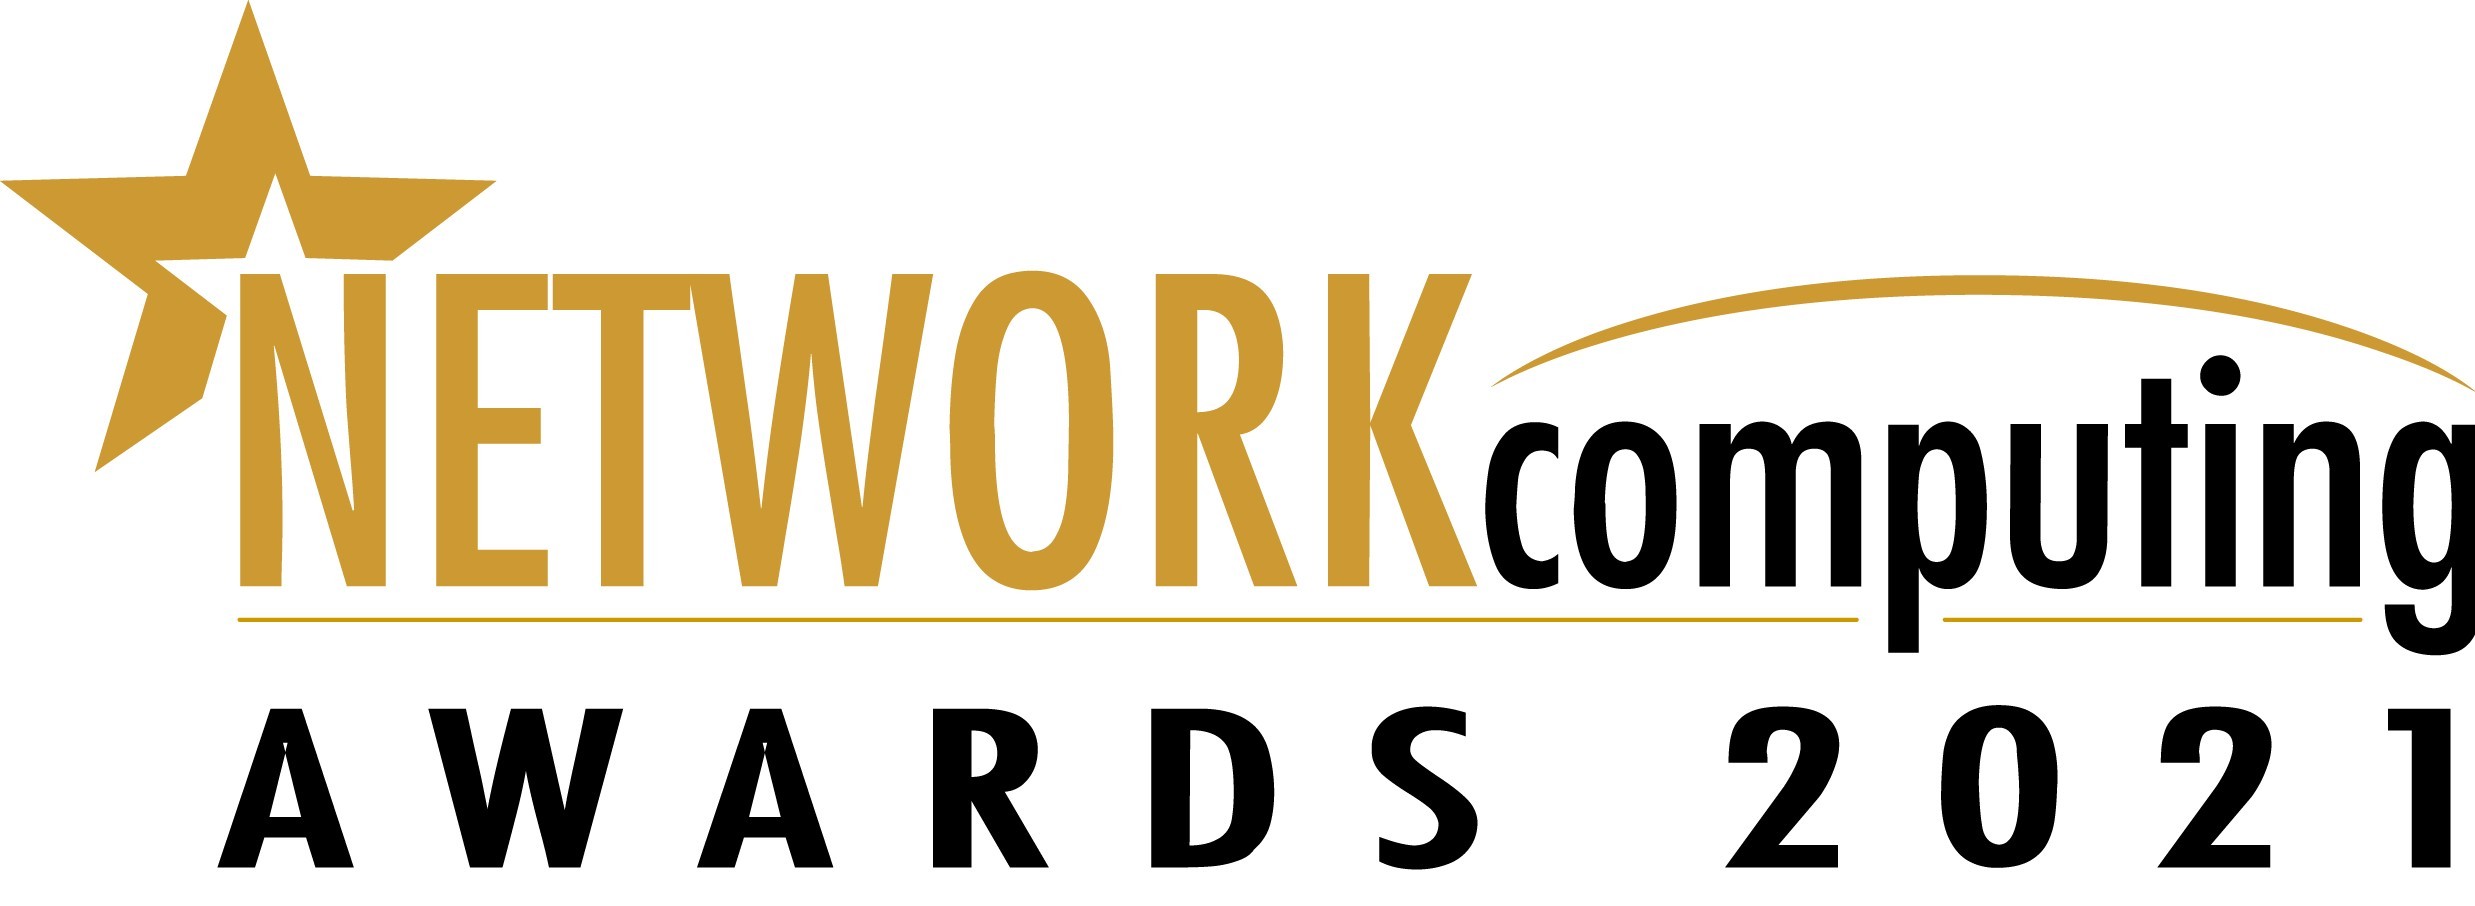 Network Computing Awards 2021